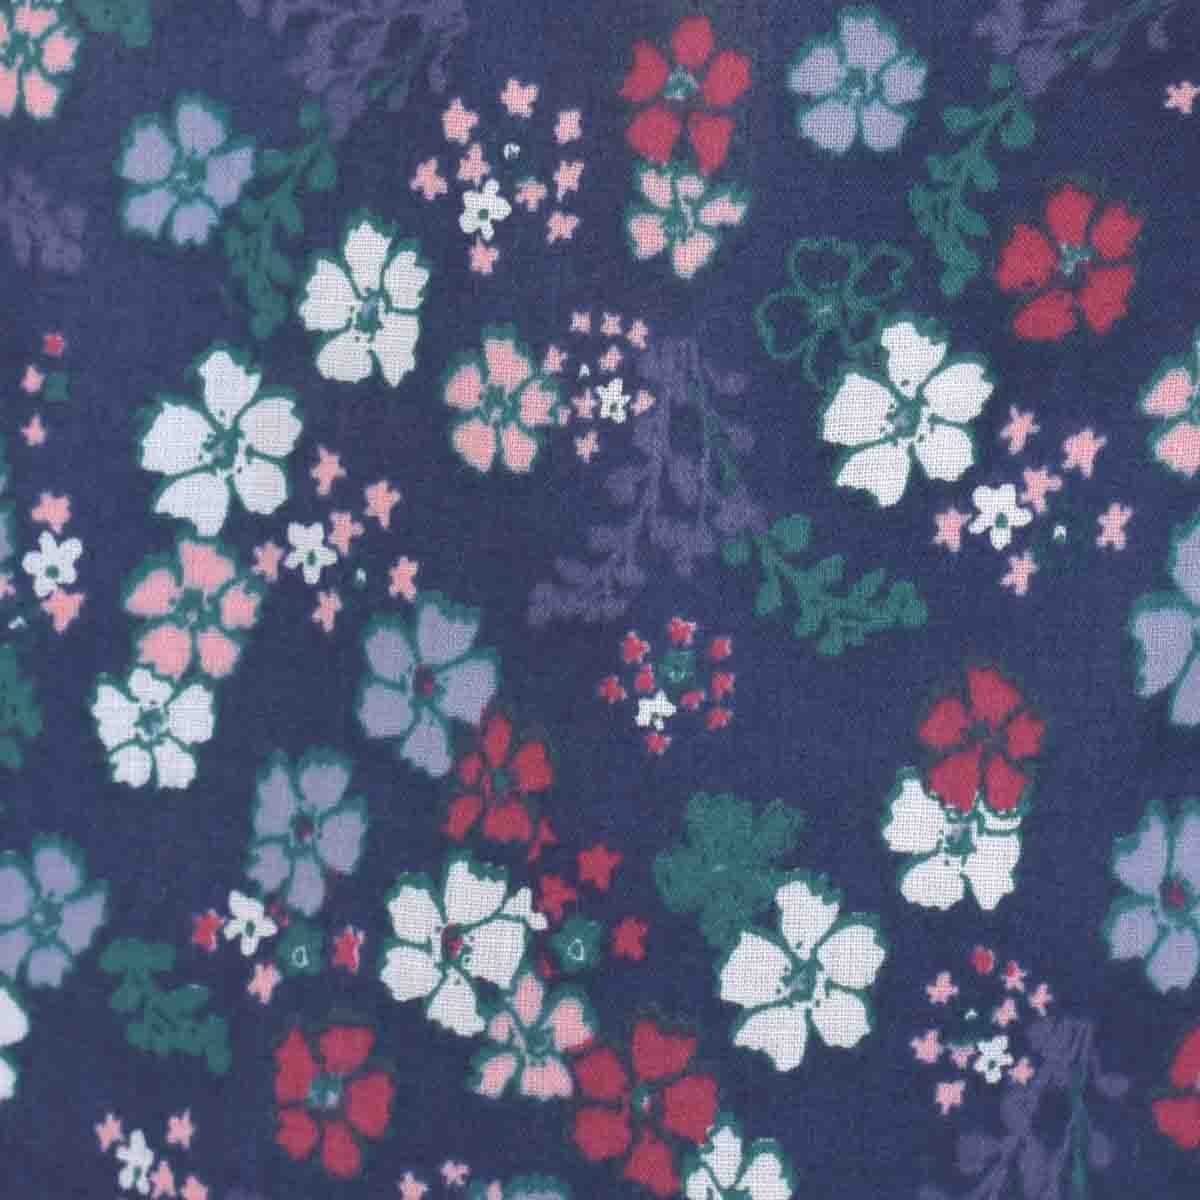 Blusa Manga Corta Estampada Flores Carosello Ver18-46